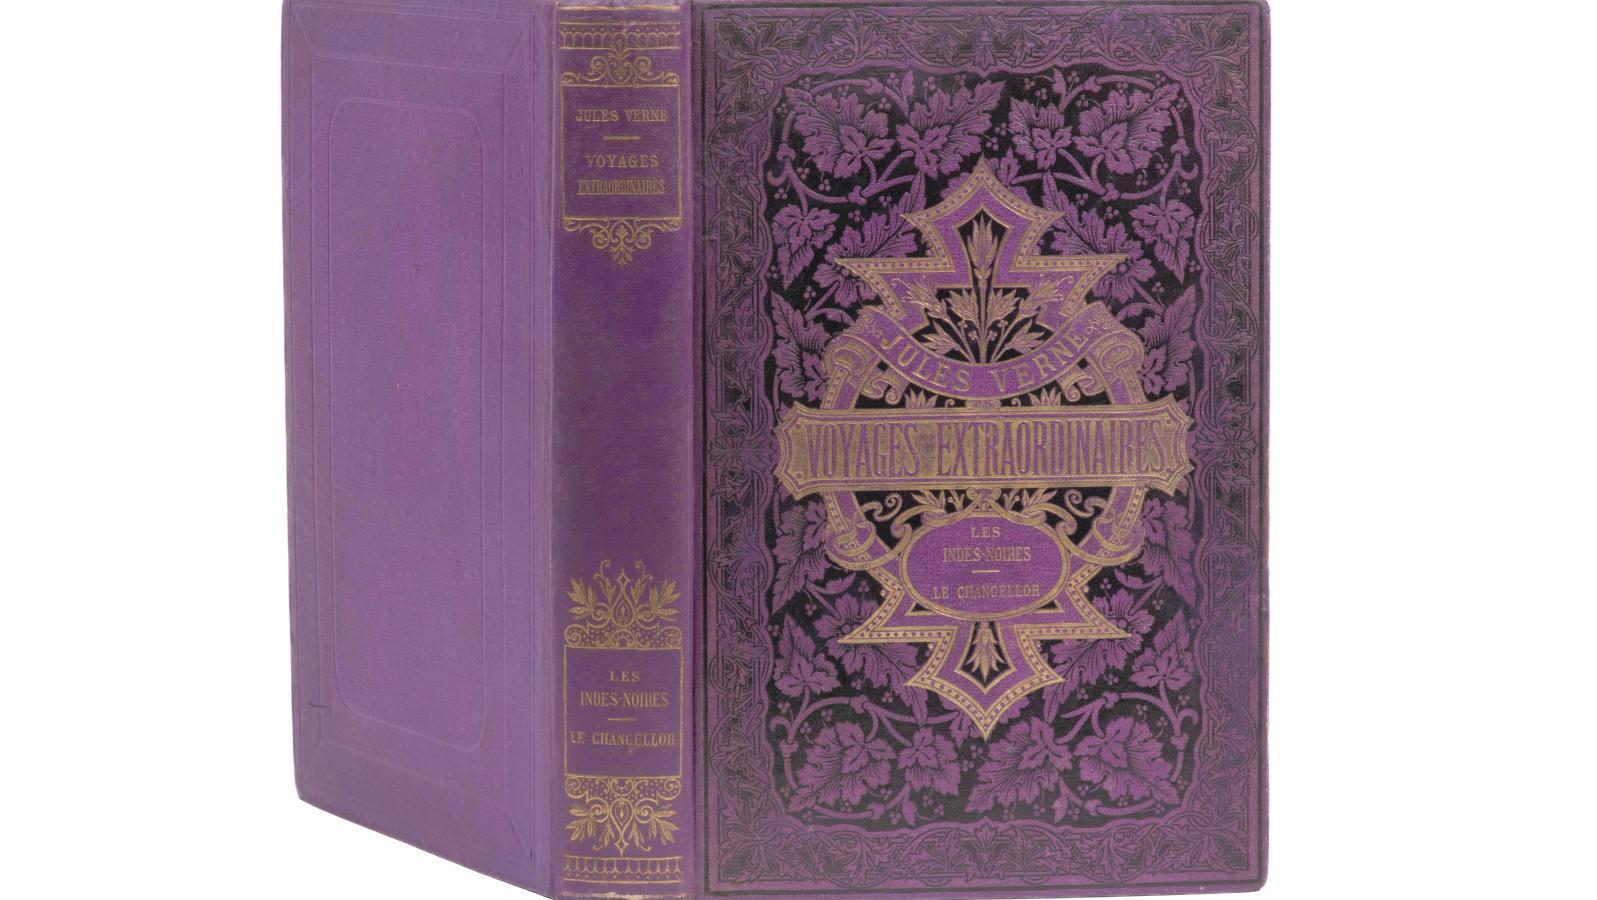   Jules Verne, Hetzel et une rare grenade violette 